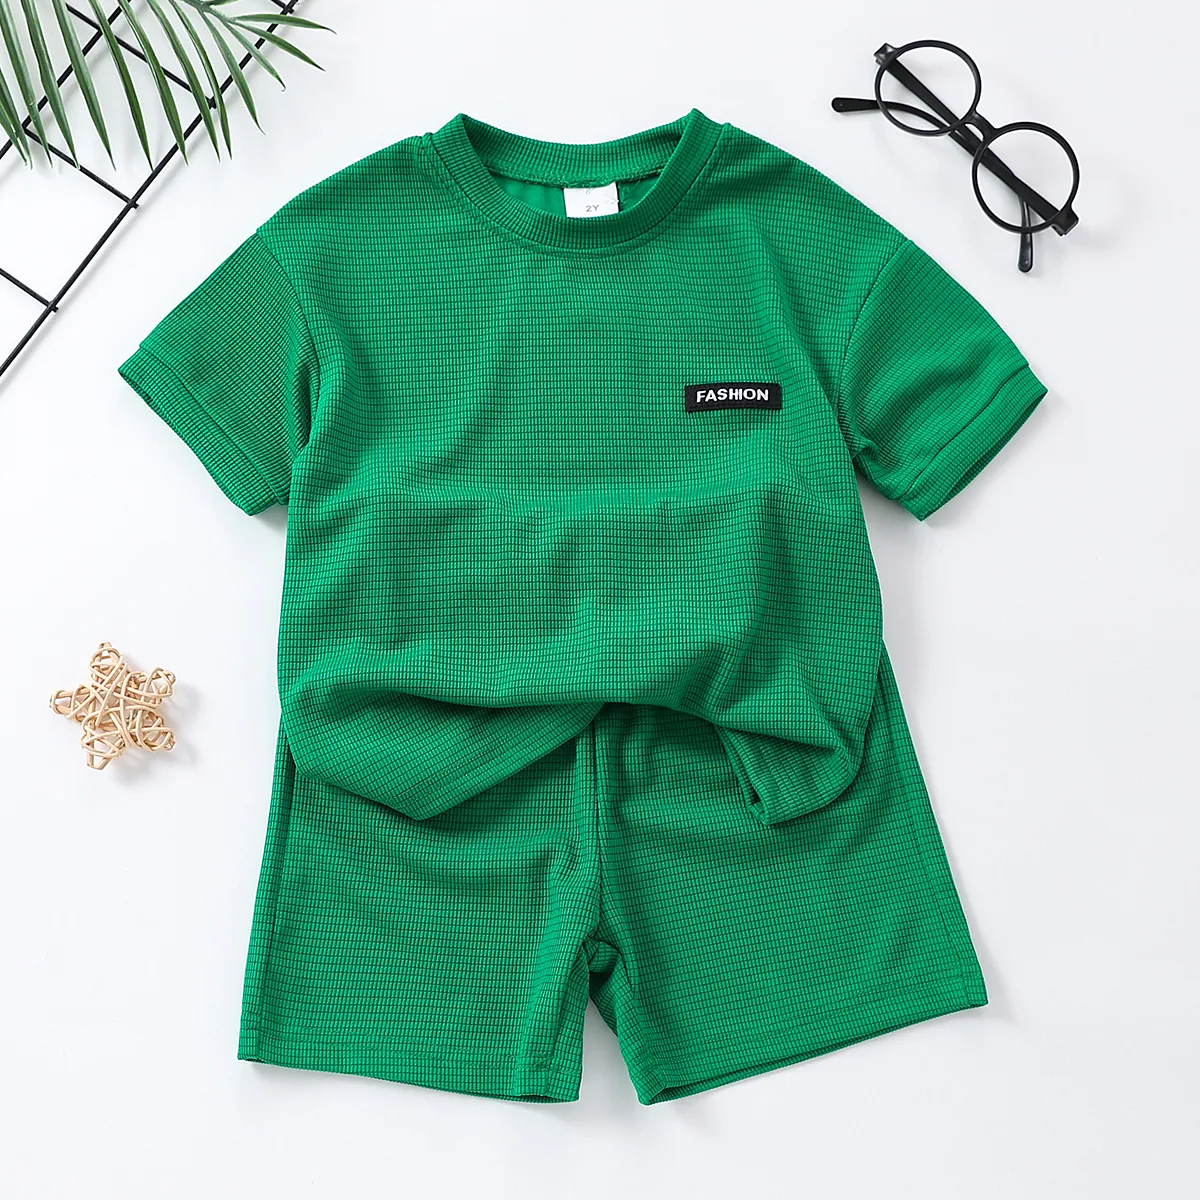 2pcs Toddler Boy's Basic Solid Color Top and Shorts Set  Green big image 1